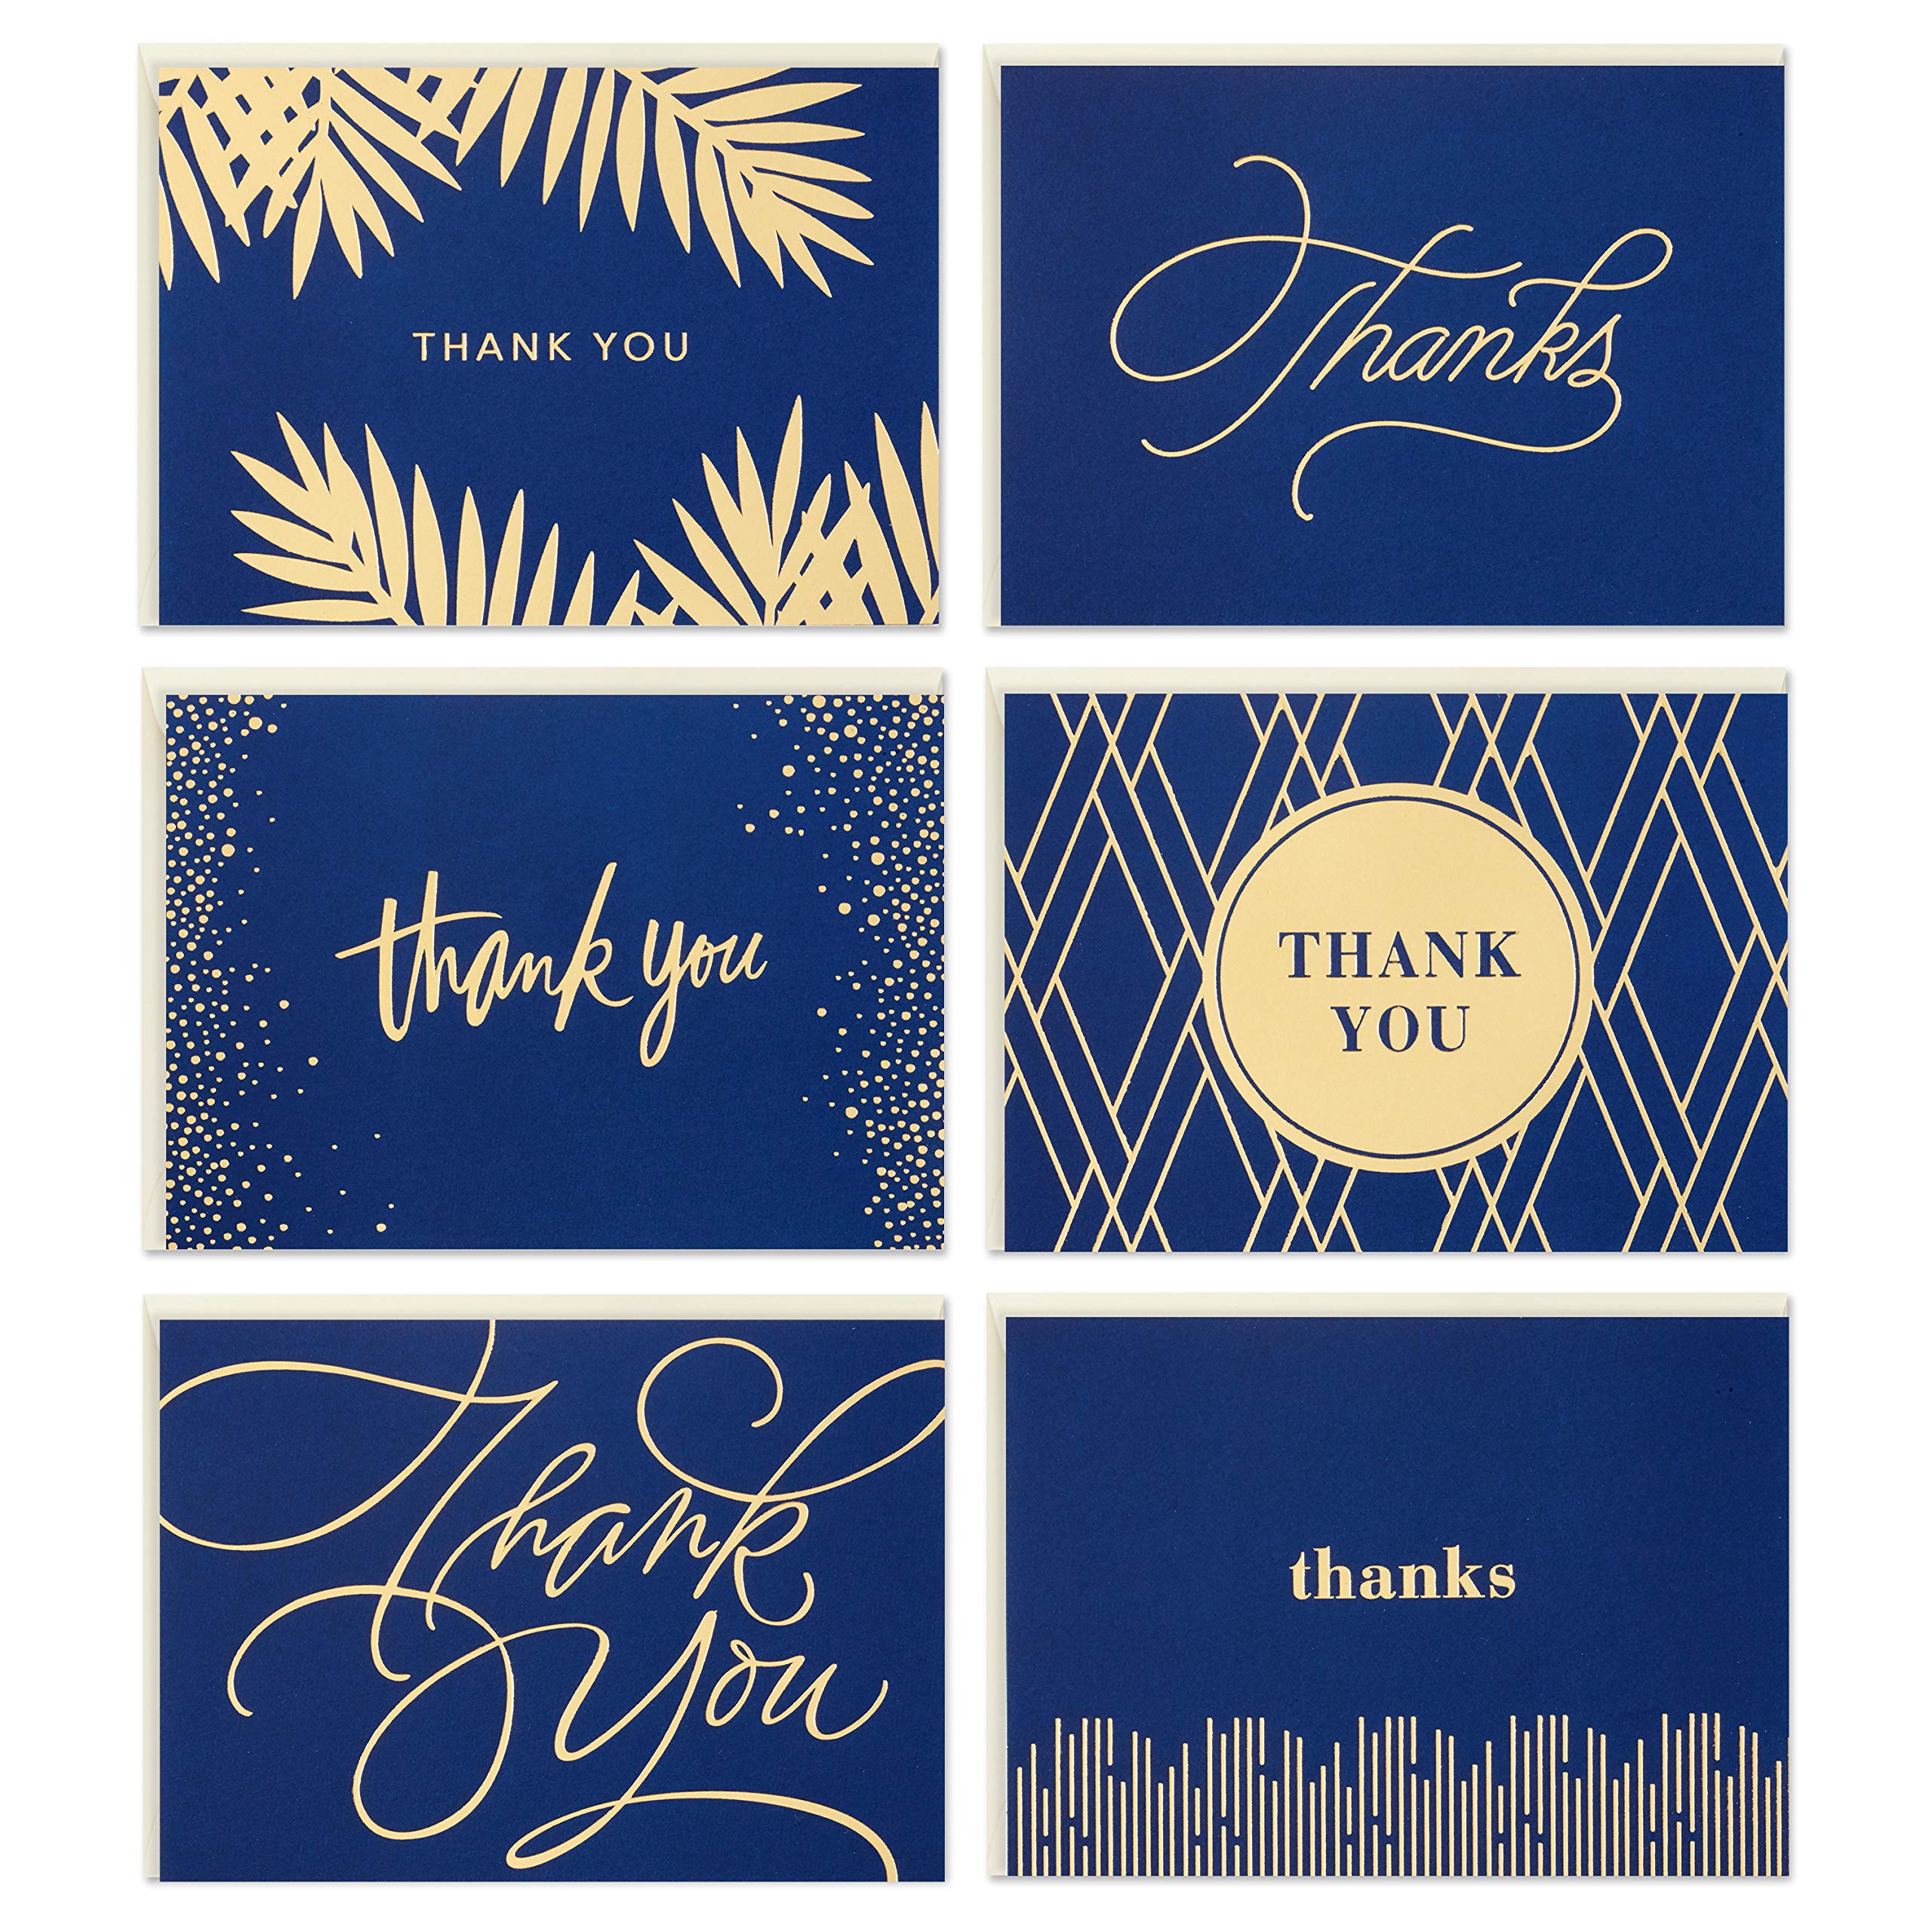 Hallmark Thank You Cards Assortment, Gold Foil, White & Thank You Cards Assortment, Gold and Navy